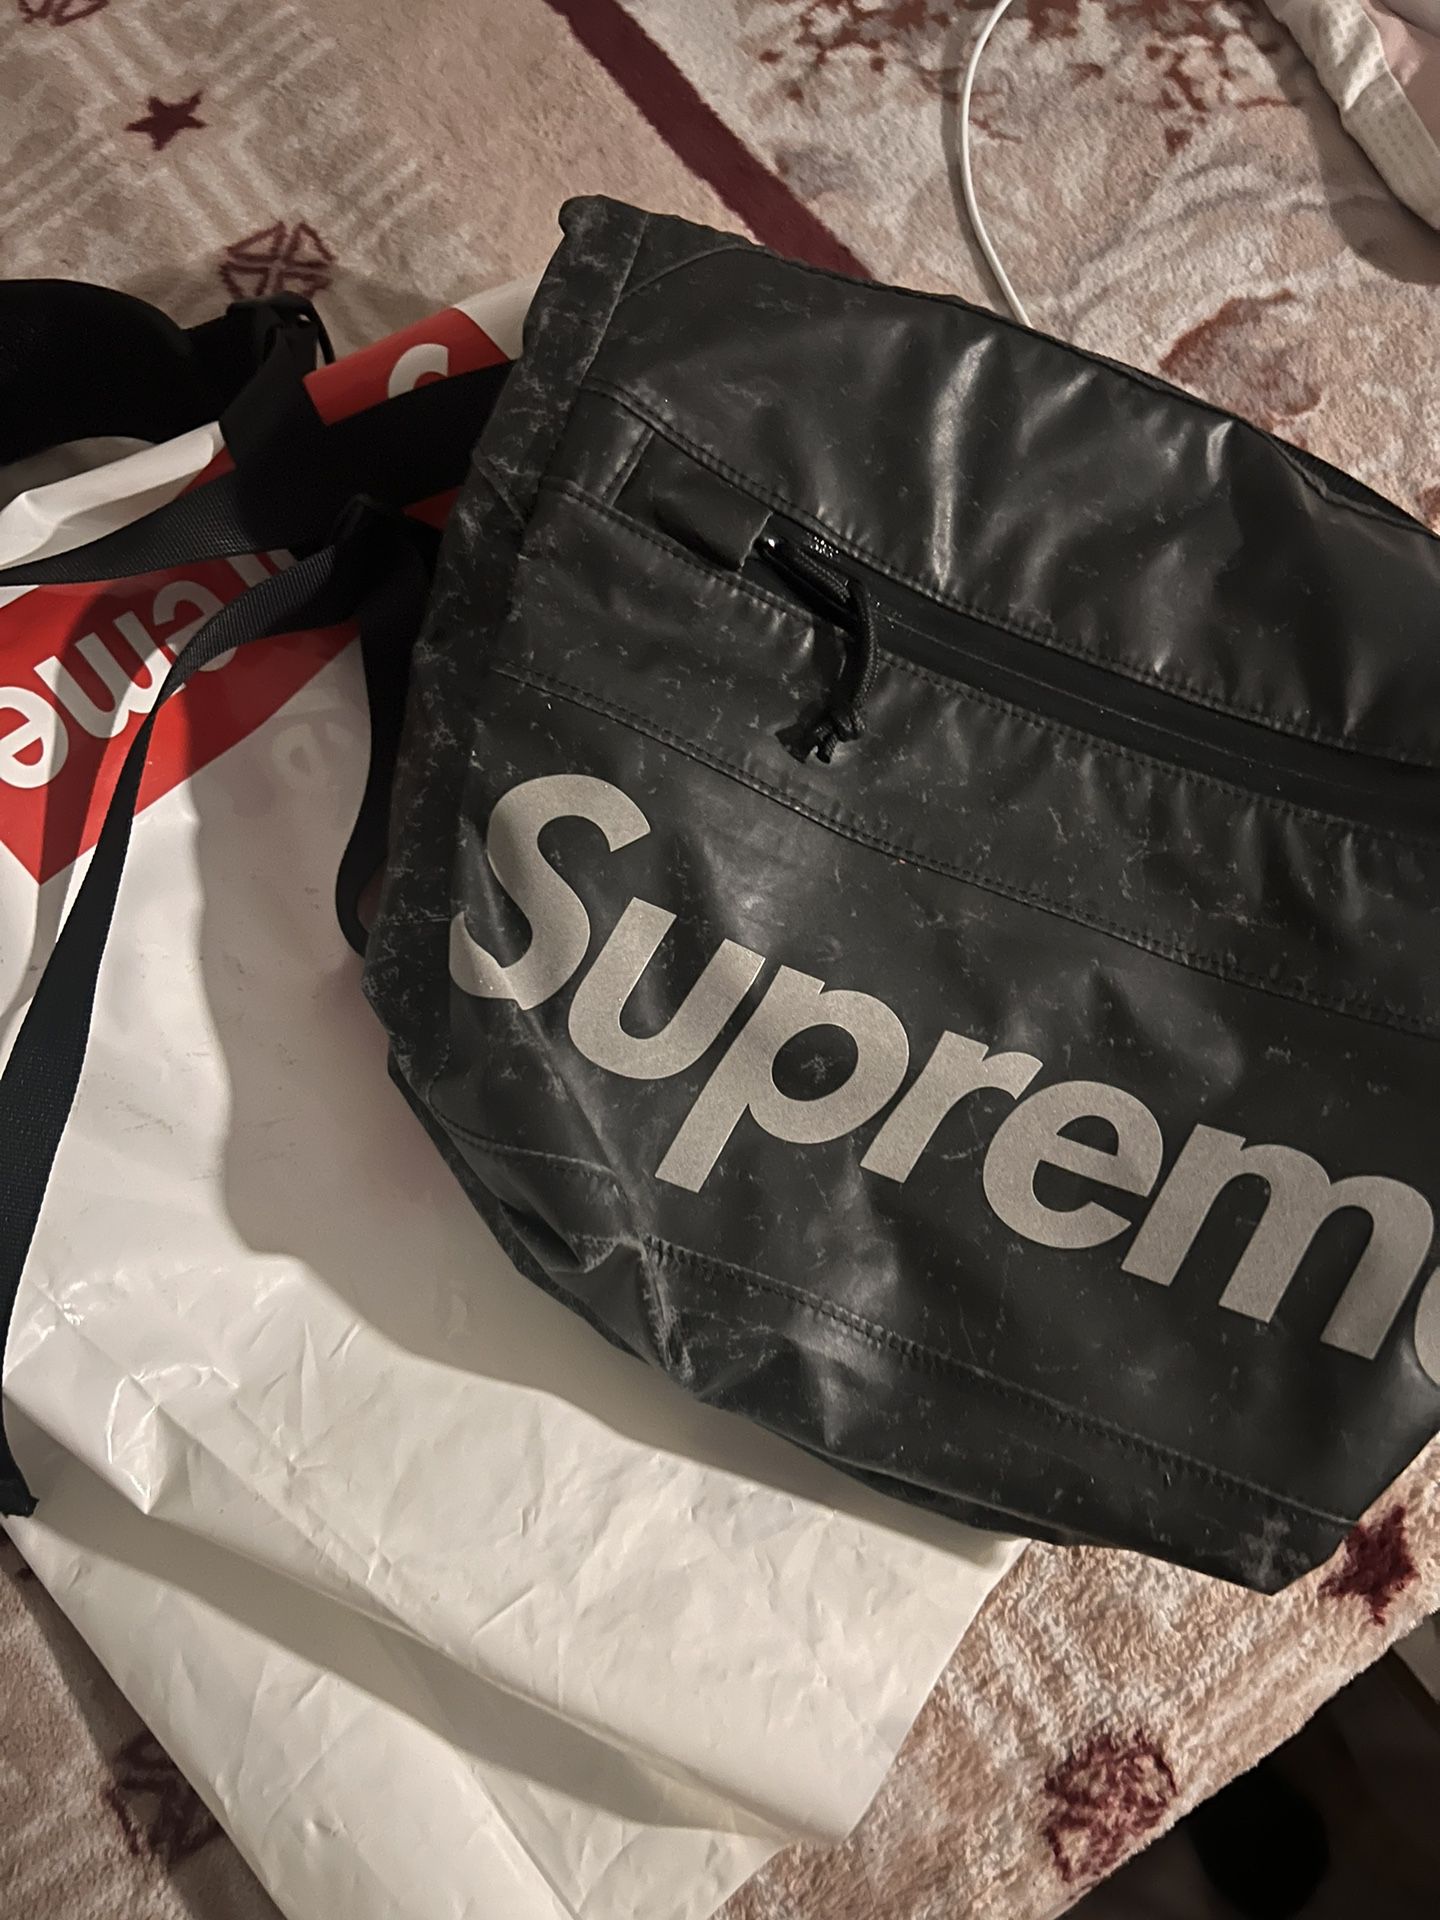 Authentic Supreme bag